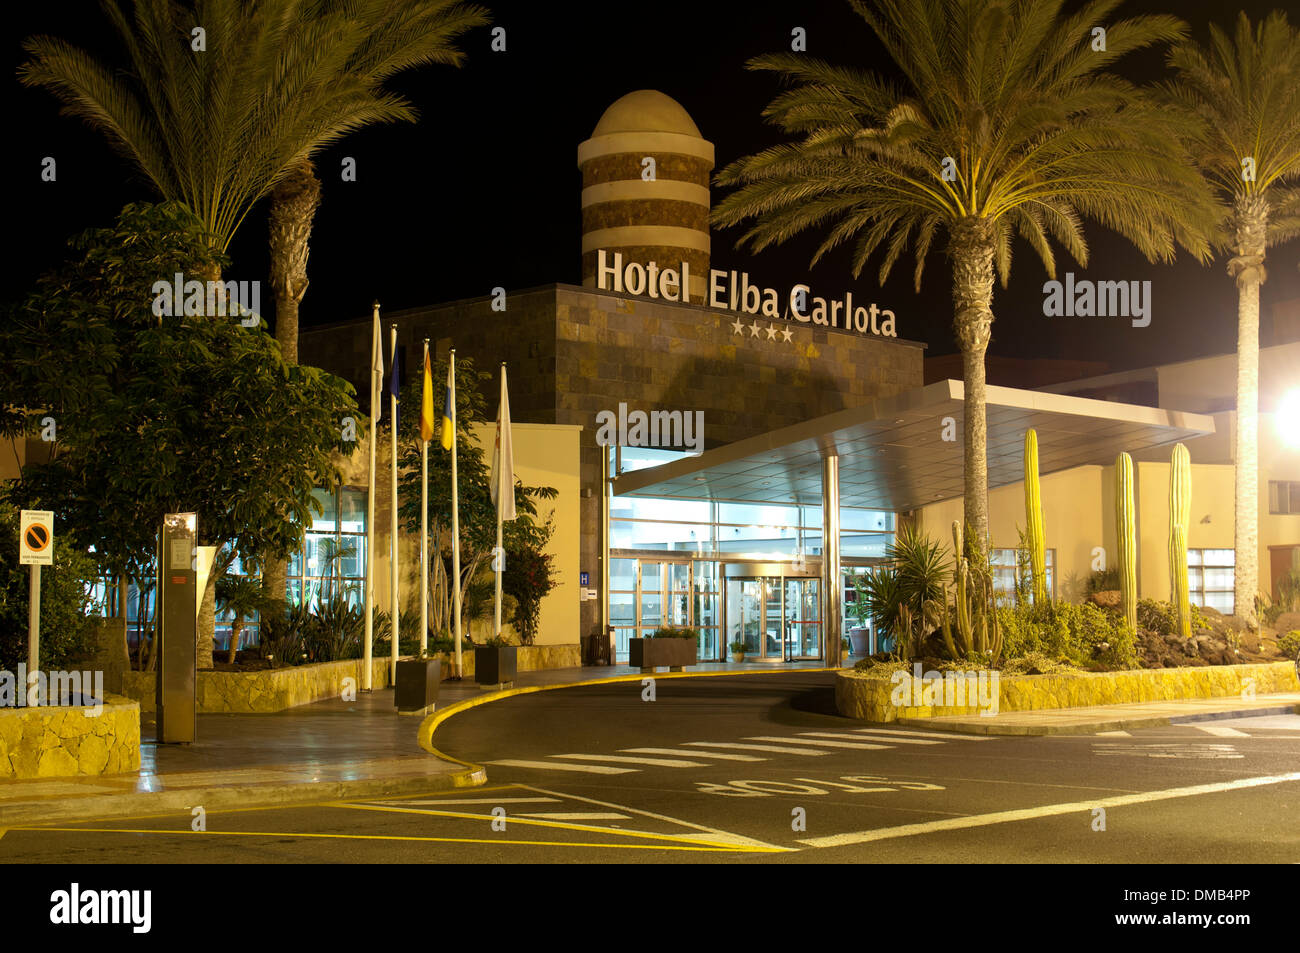 Hotel Elba Carlota at night, Caleta de Fuste, Fuerteventura, Canary Islands, Spain. Stock Photo